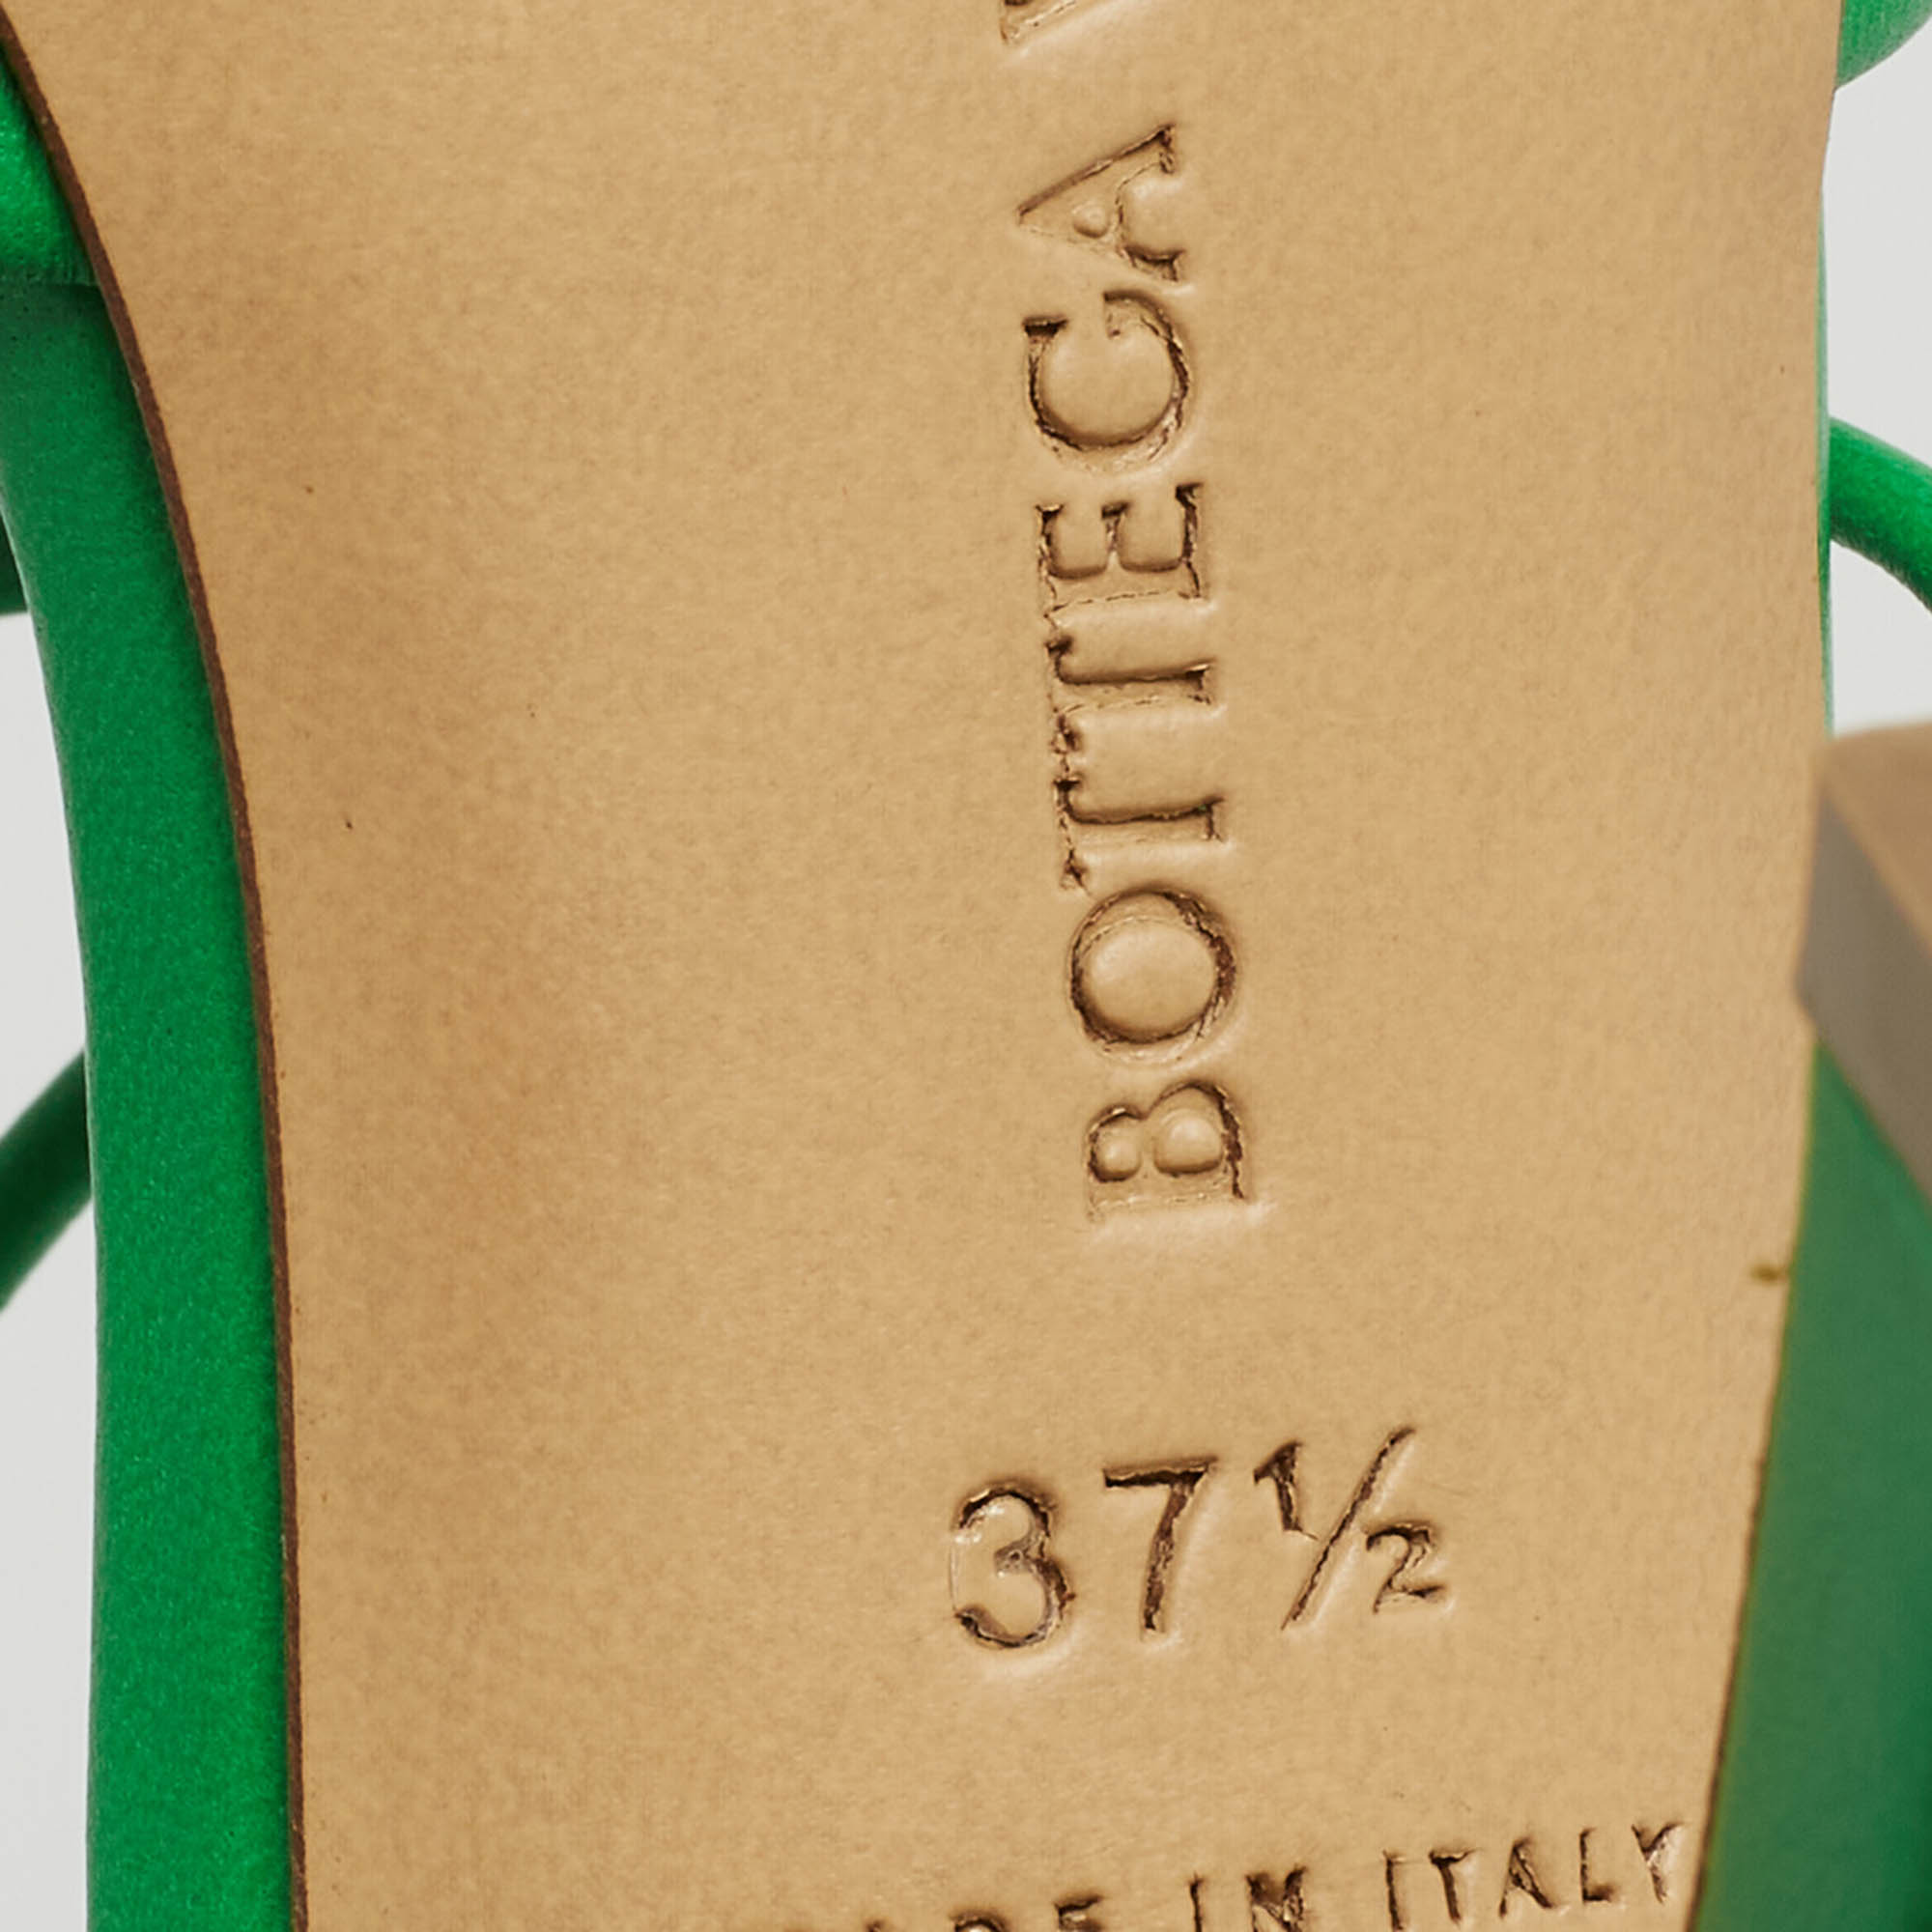 Bottega Veneta Green Mesh Stretch Ankle Tie Pumps Size 37.5